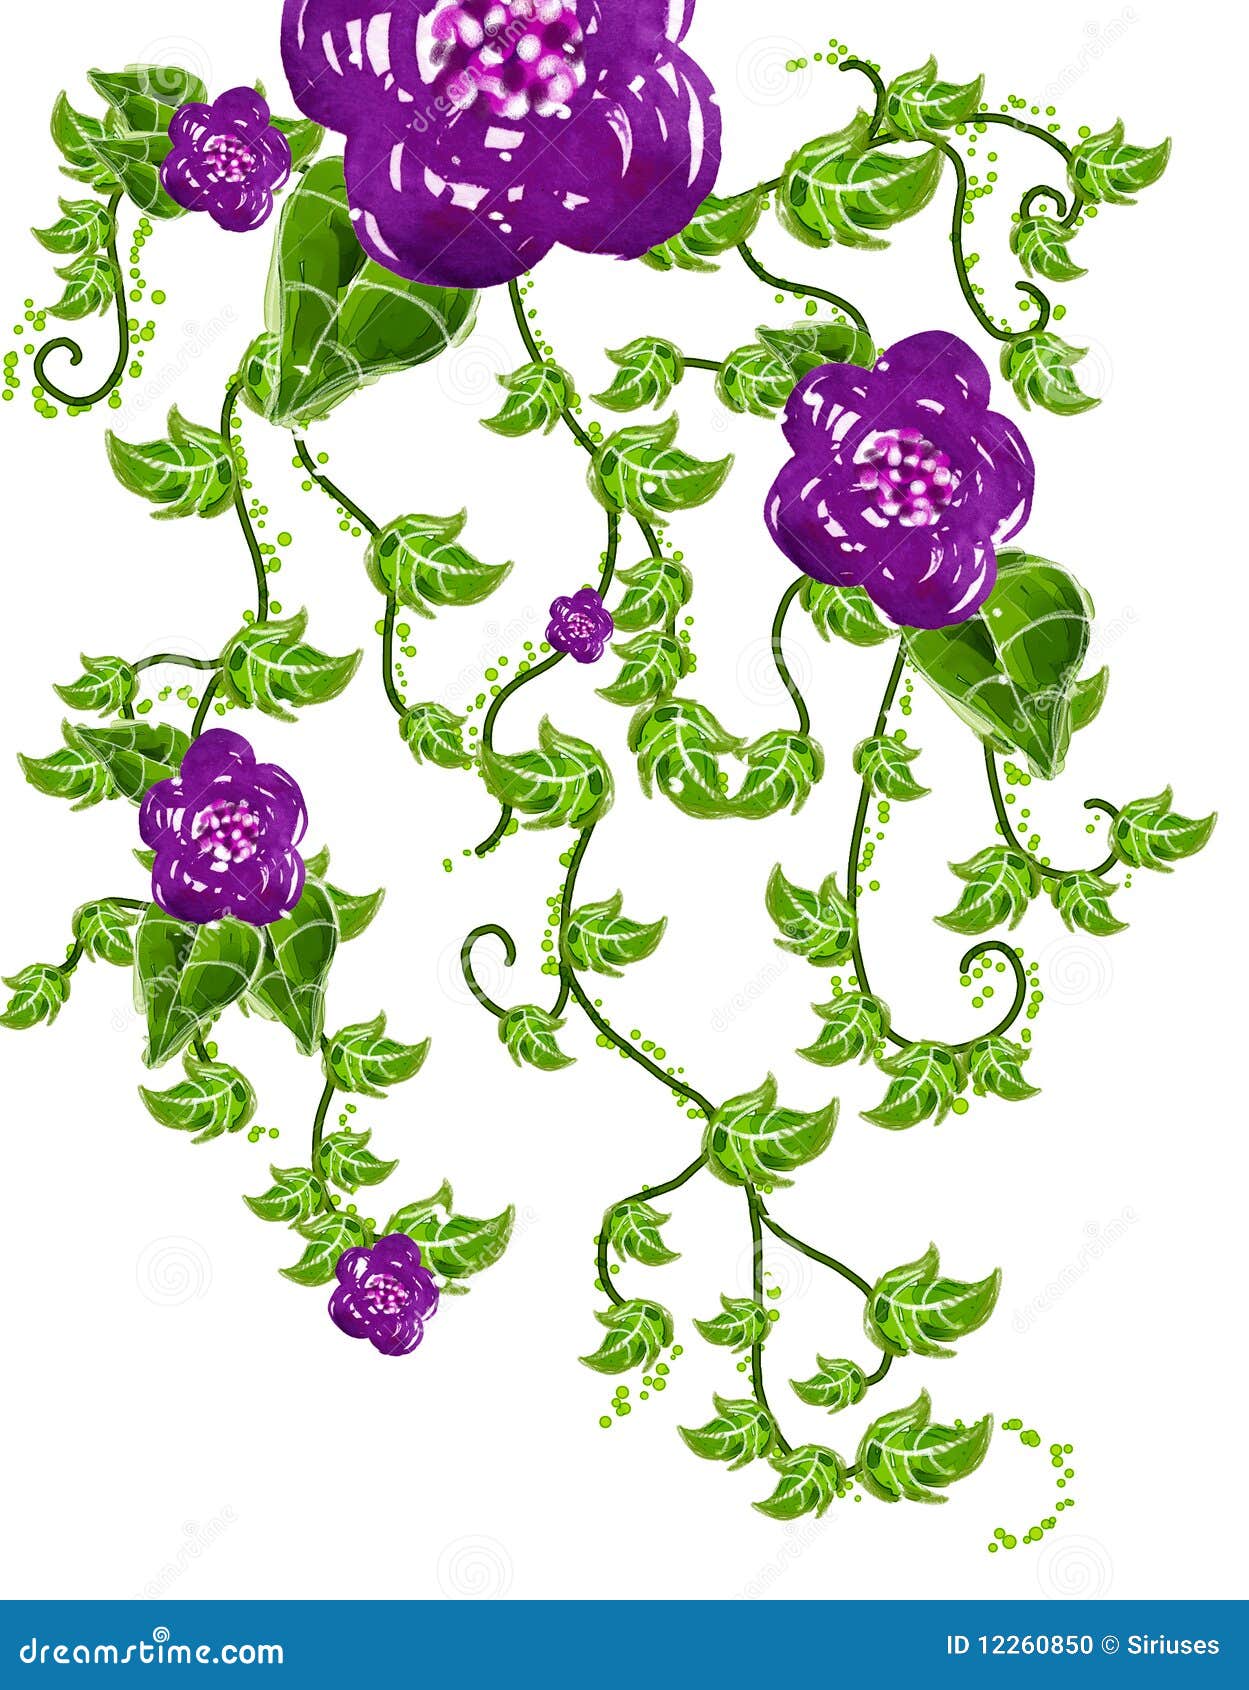 Flower and vines stock illustration. Illustration of bordering - 12260850